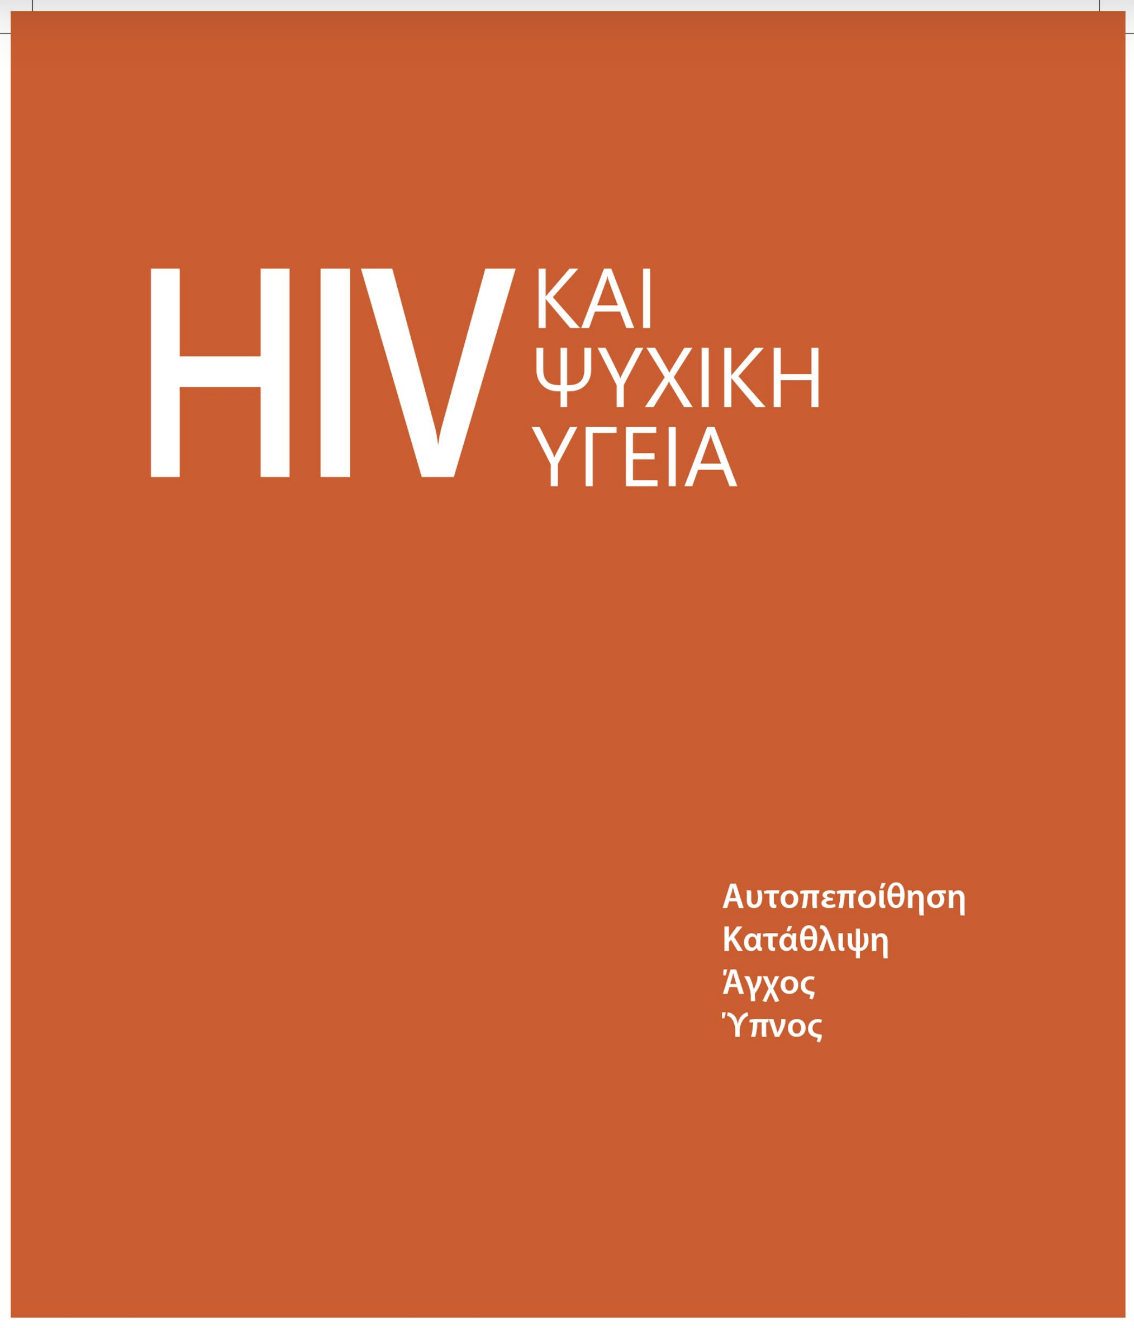 Featured image for “HIV & Ψυχική Υγεία: νέος, δωρεάν οδηγός”